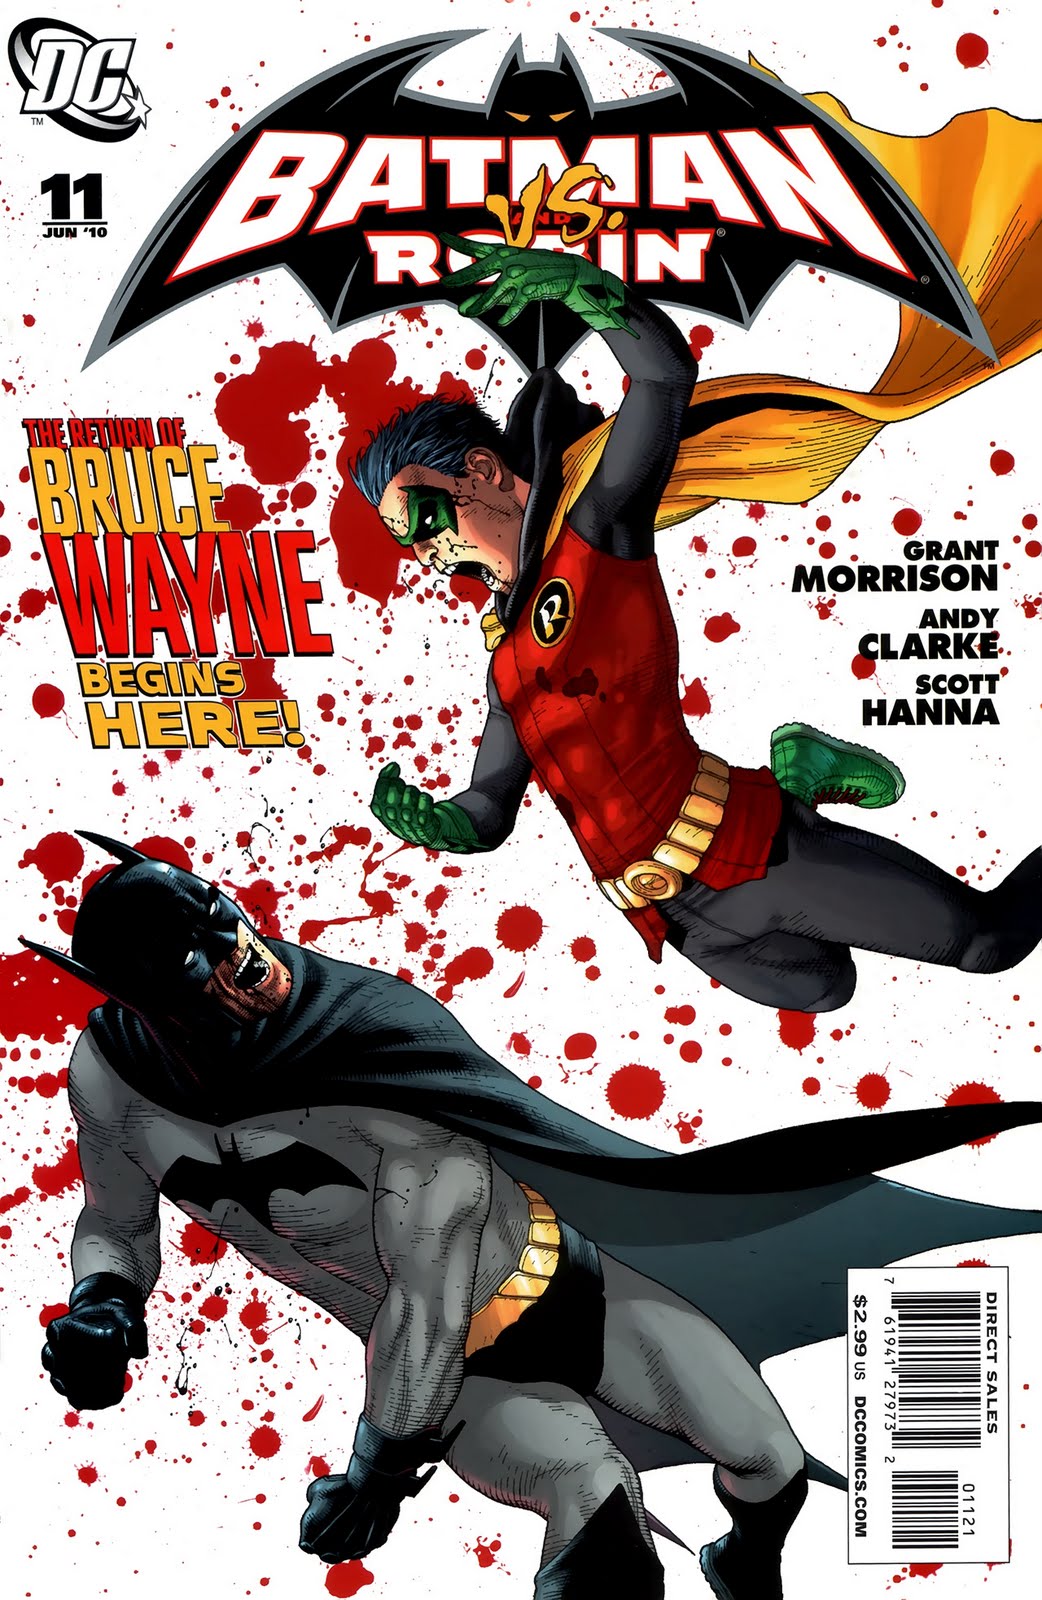 Reseña: Batman vs Robin (Batman and Robin 10-12)